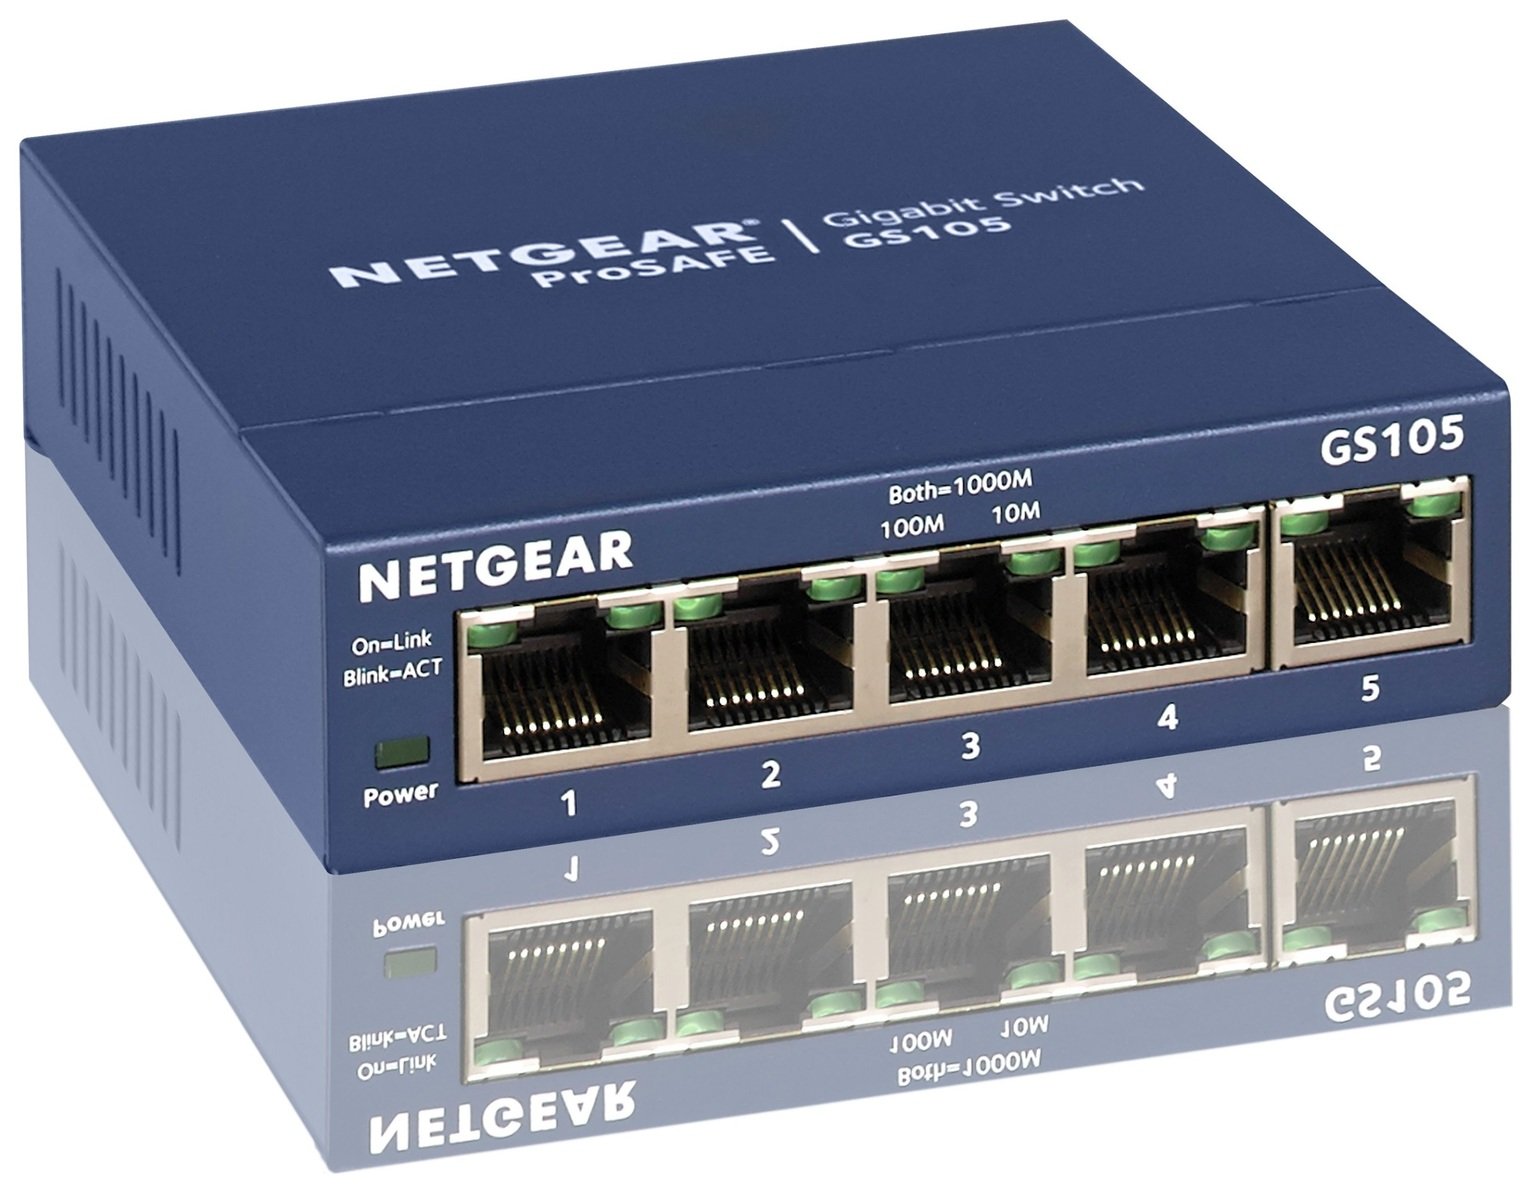 Netgear 5 Port Ethernet Gigabit Switch Review